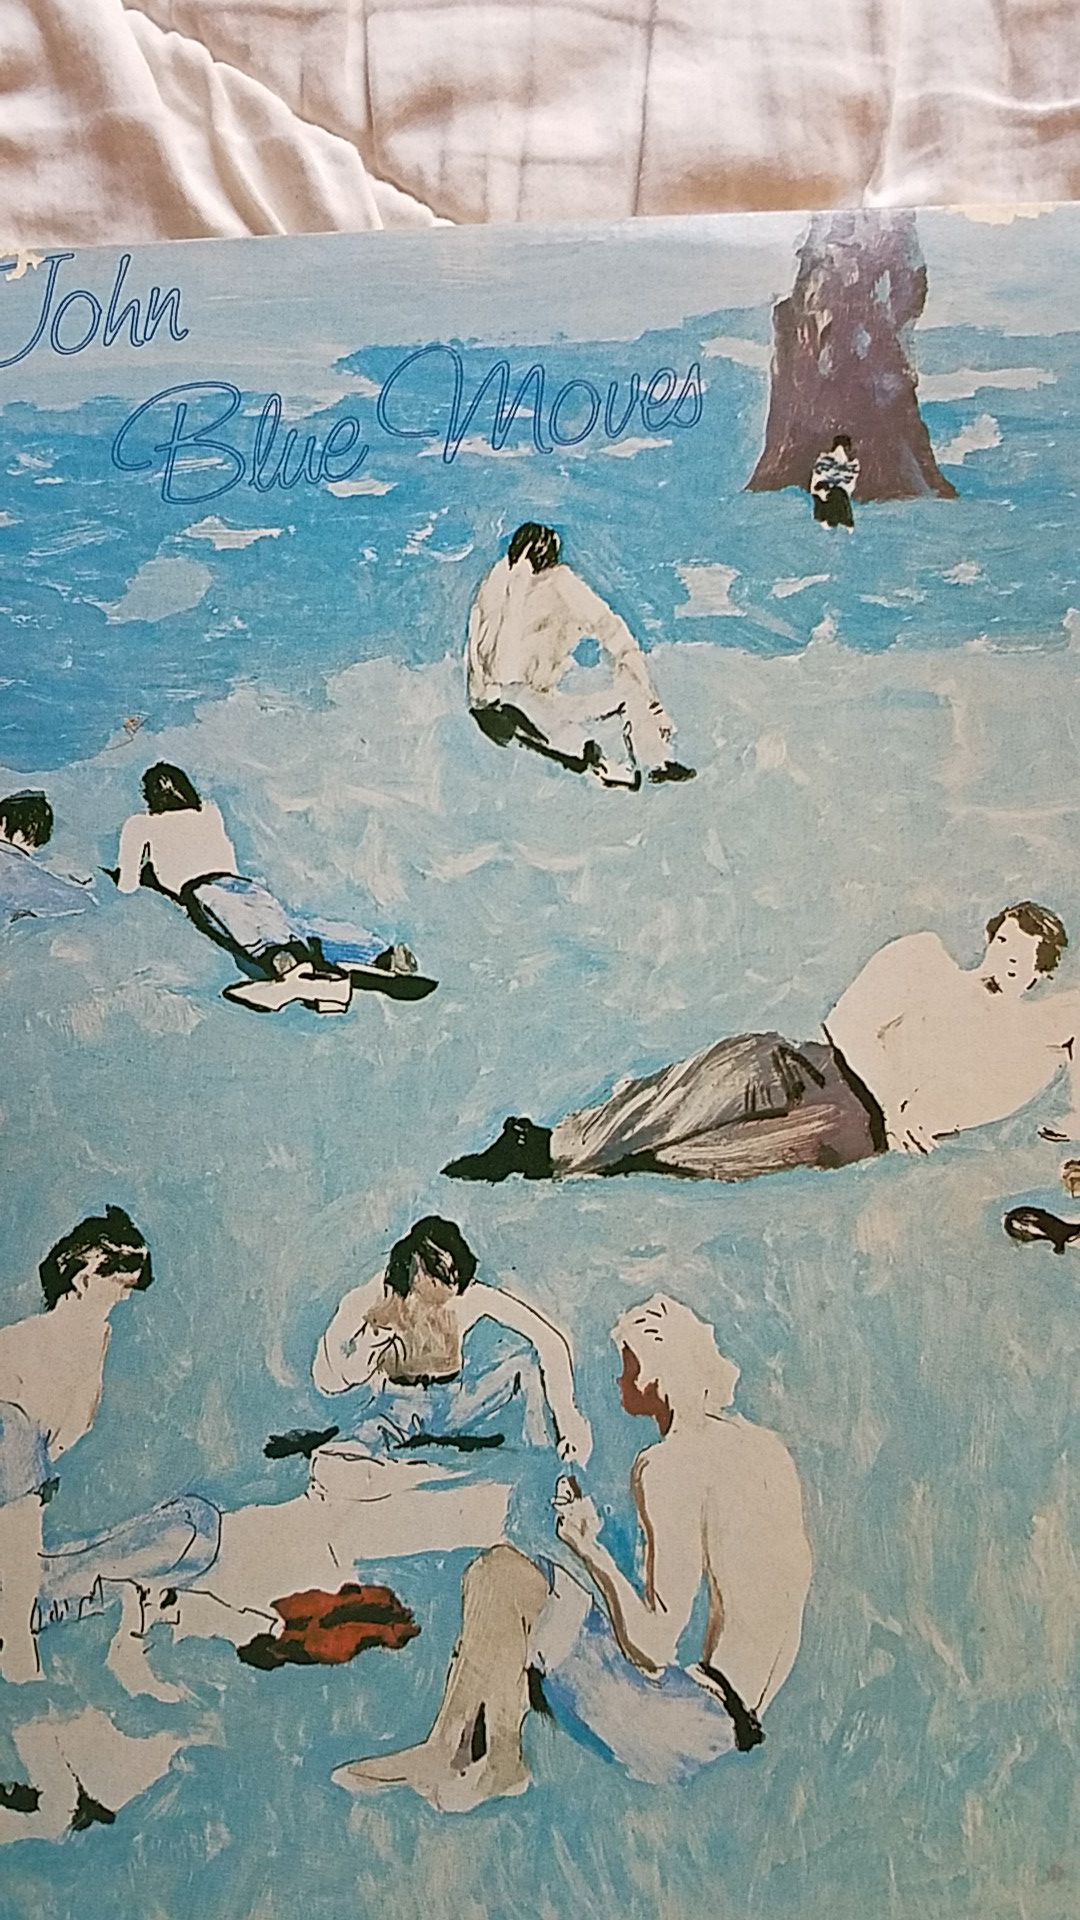 Elton John - Blue Moves double LP